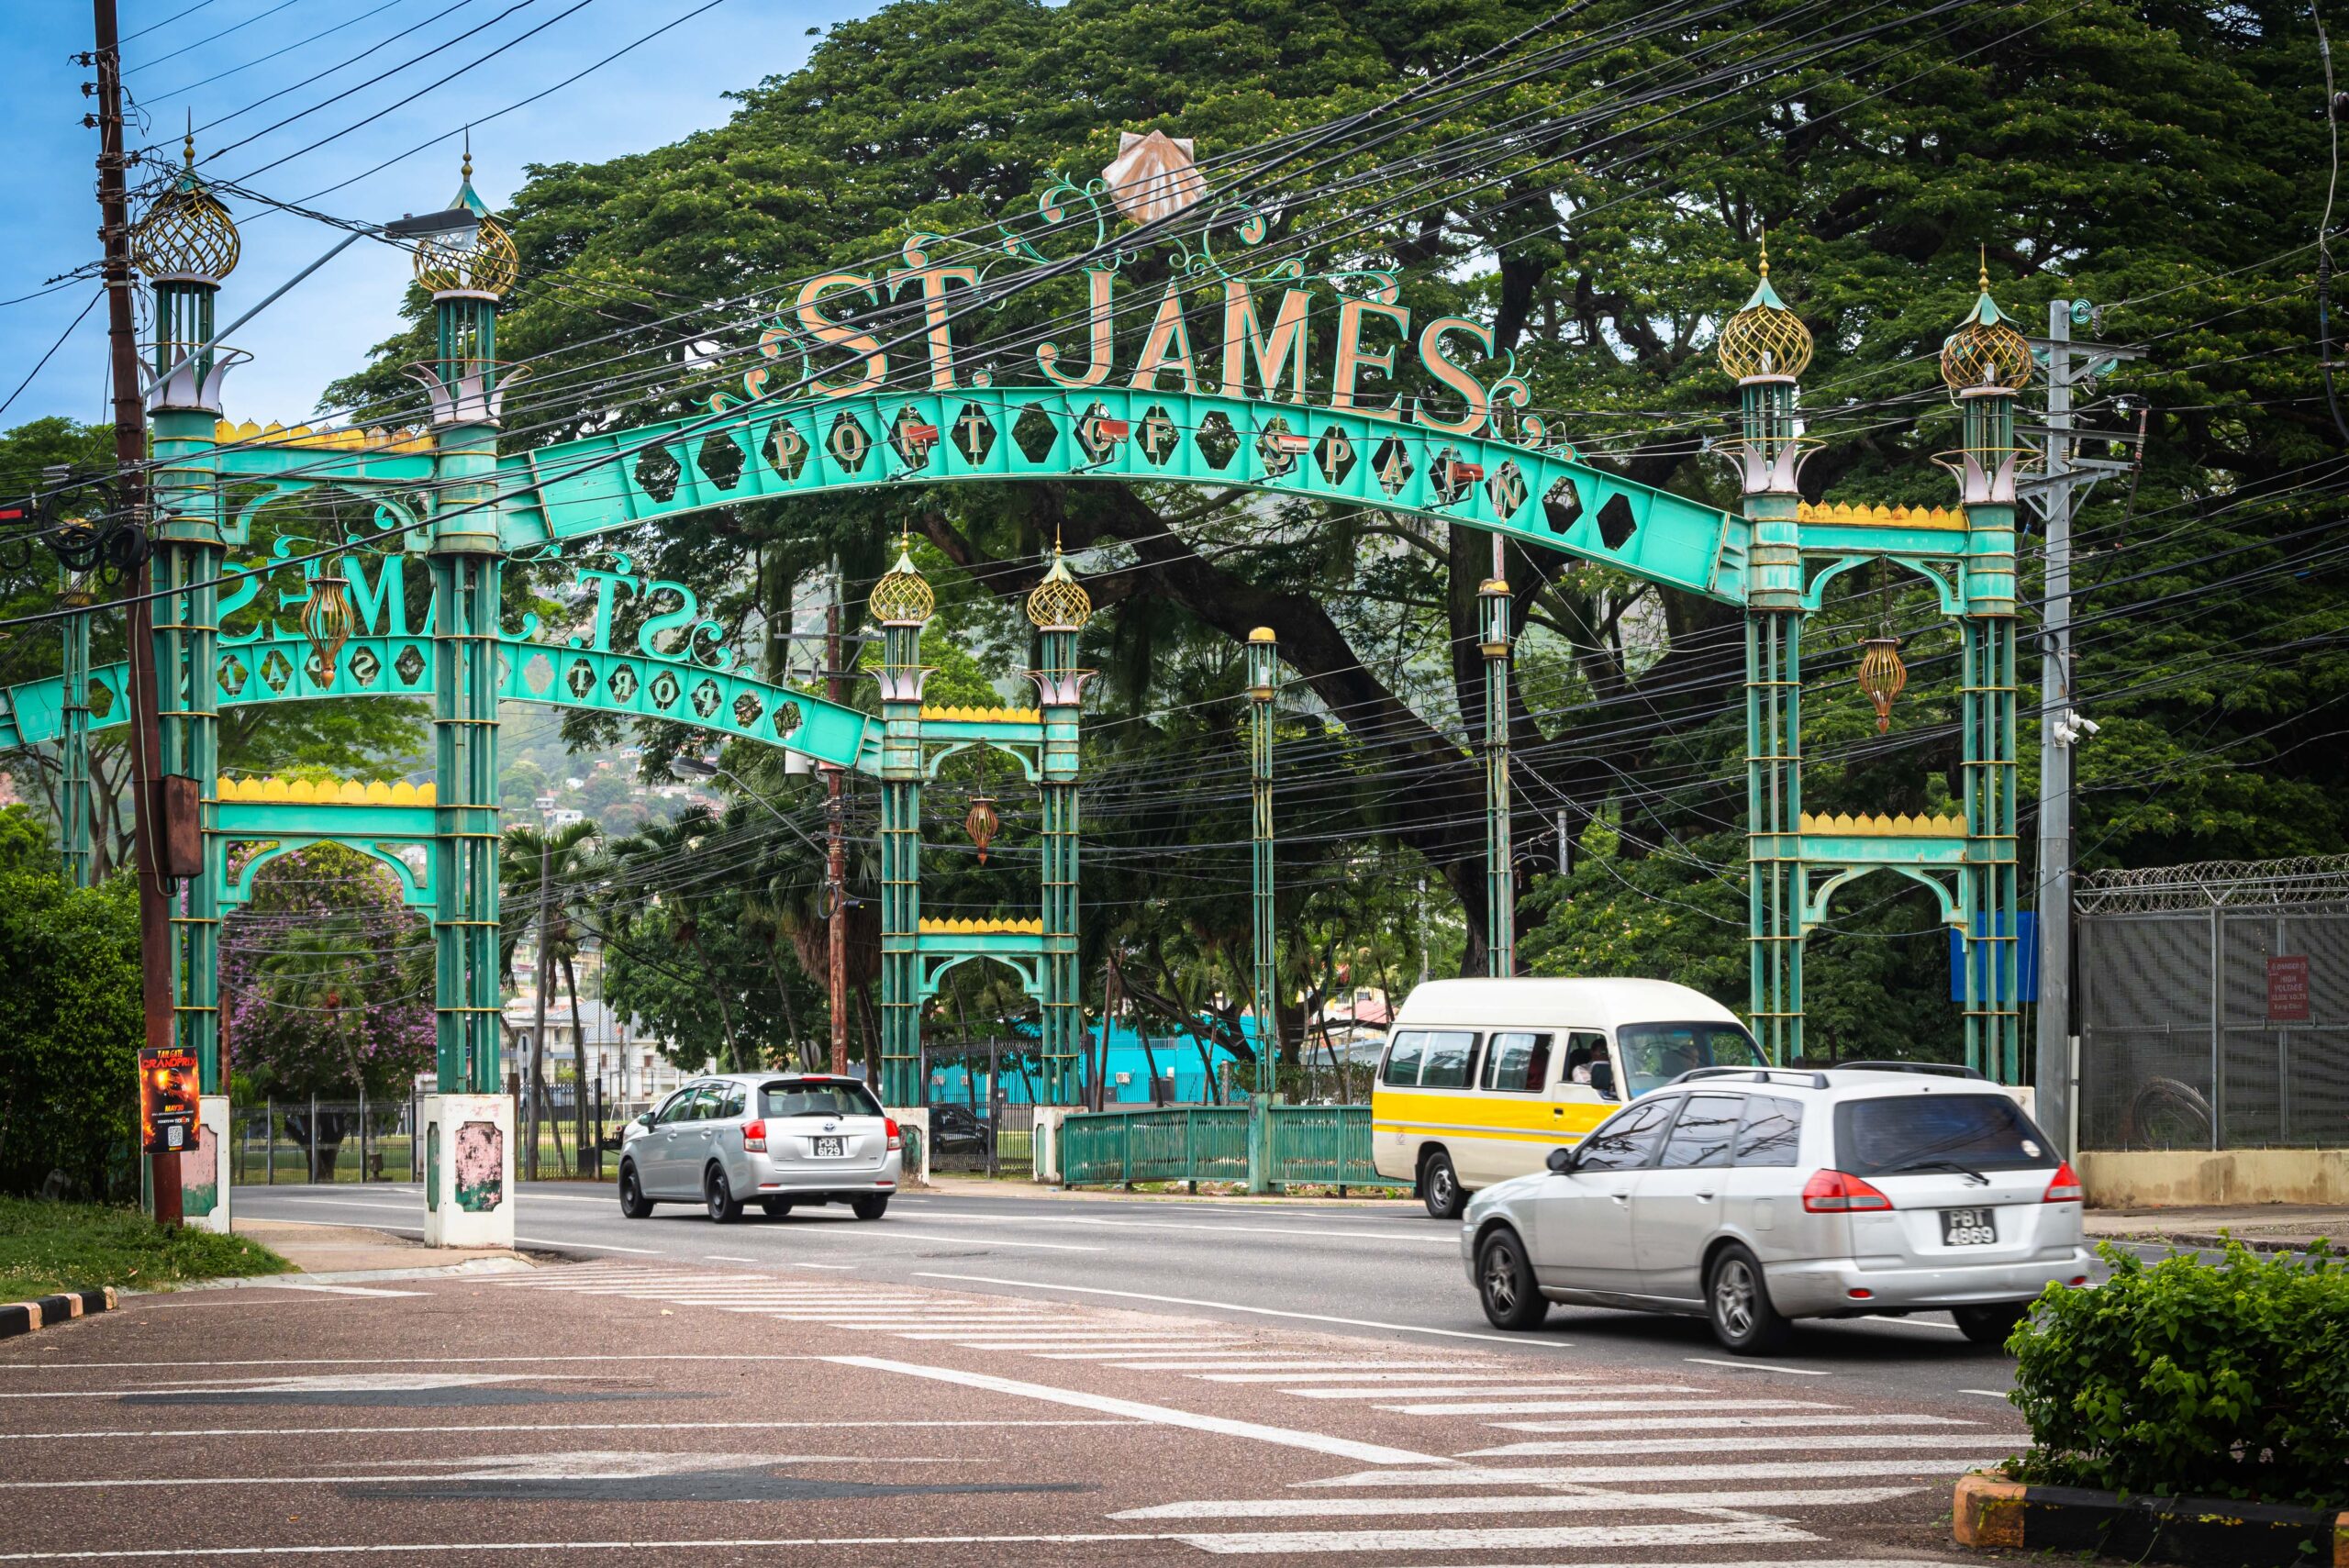 St James Gates in Port of Spain, Trinidad